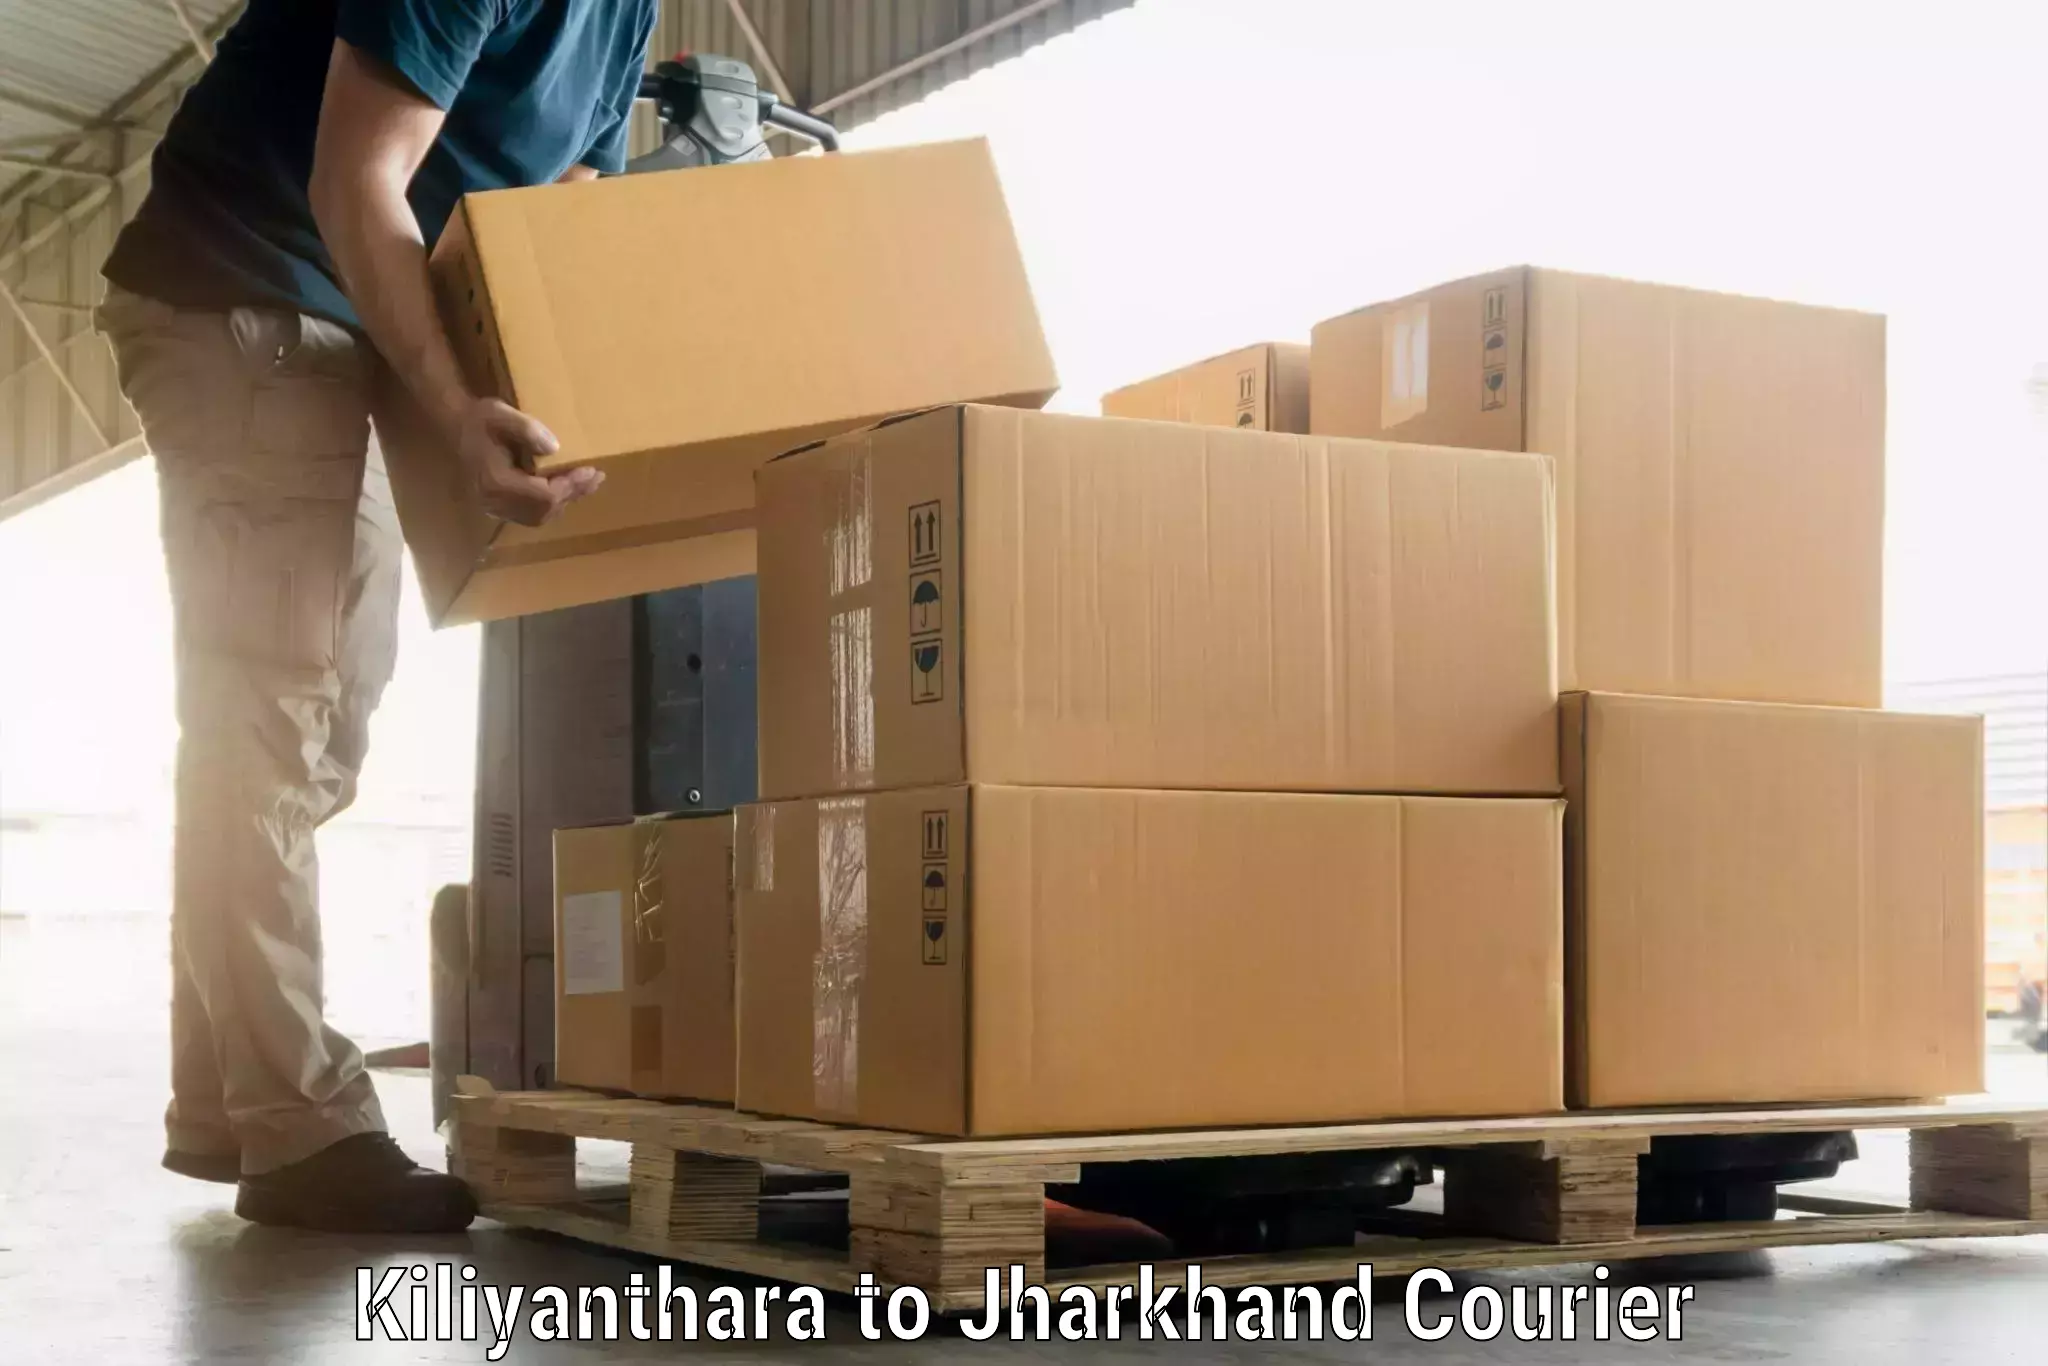 Luggage shipment specialists Kiliyanthara to Bundu